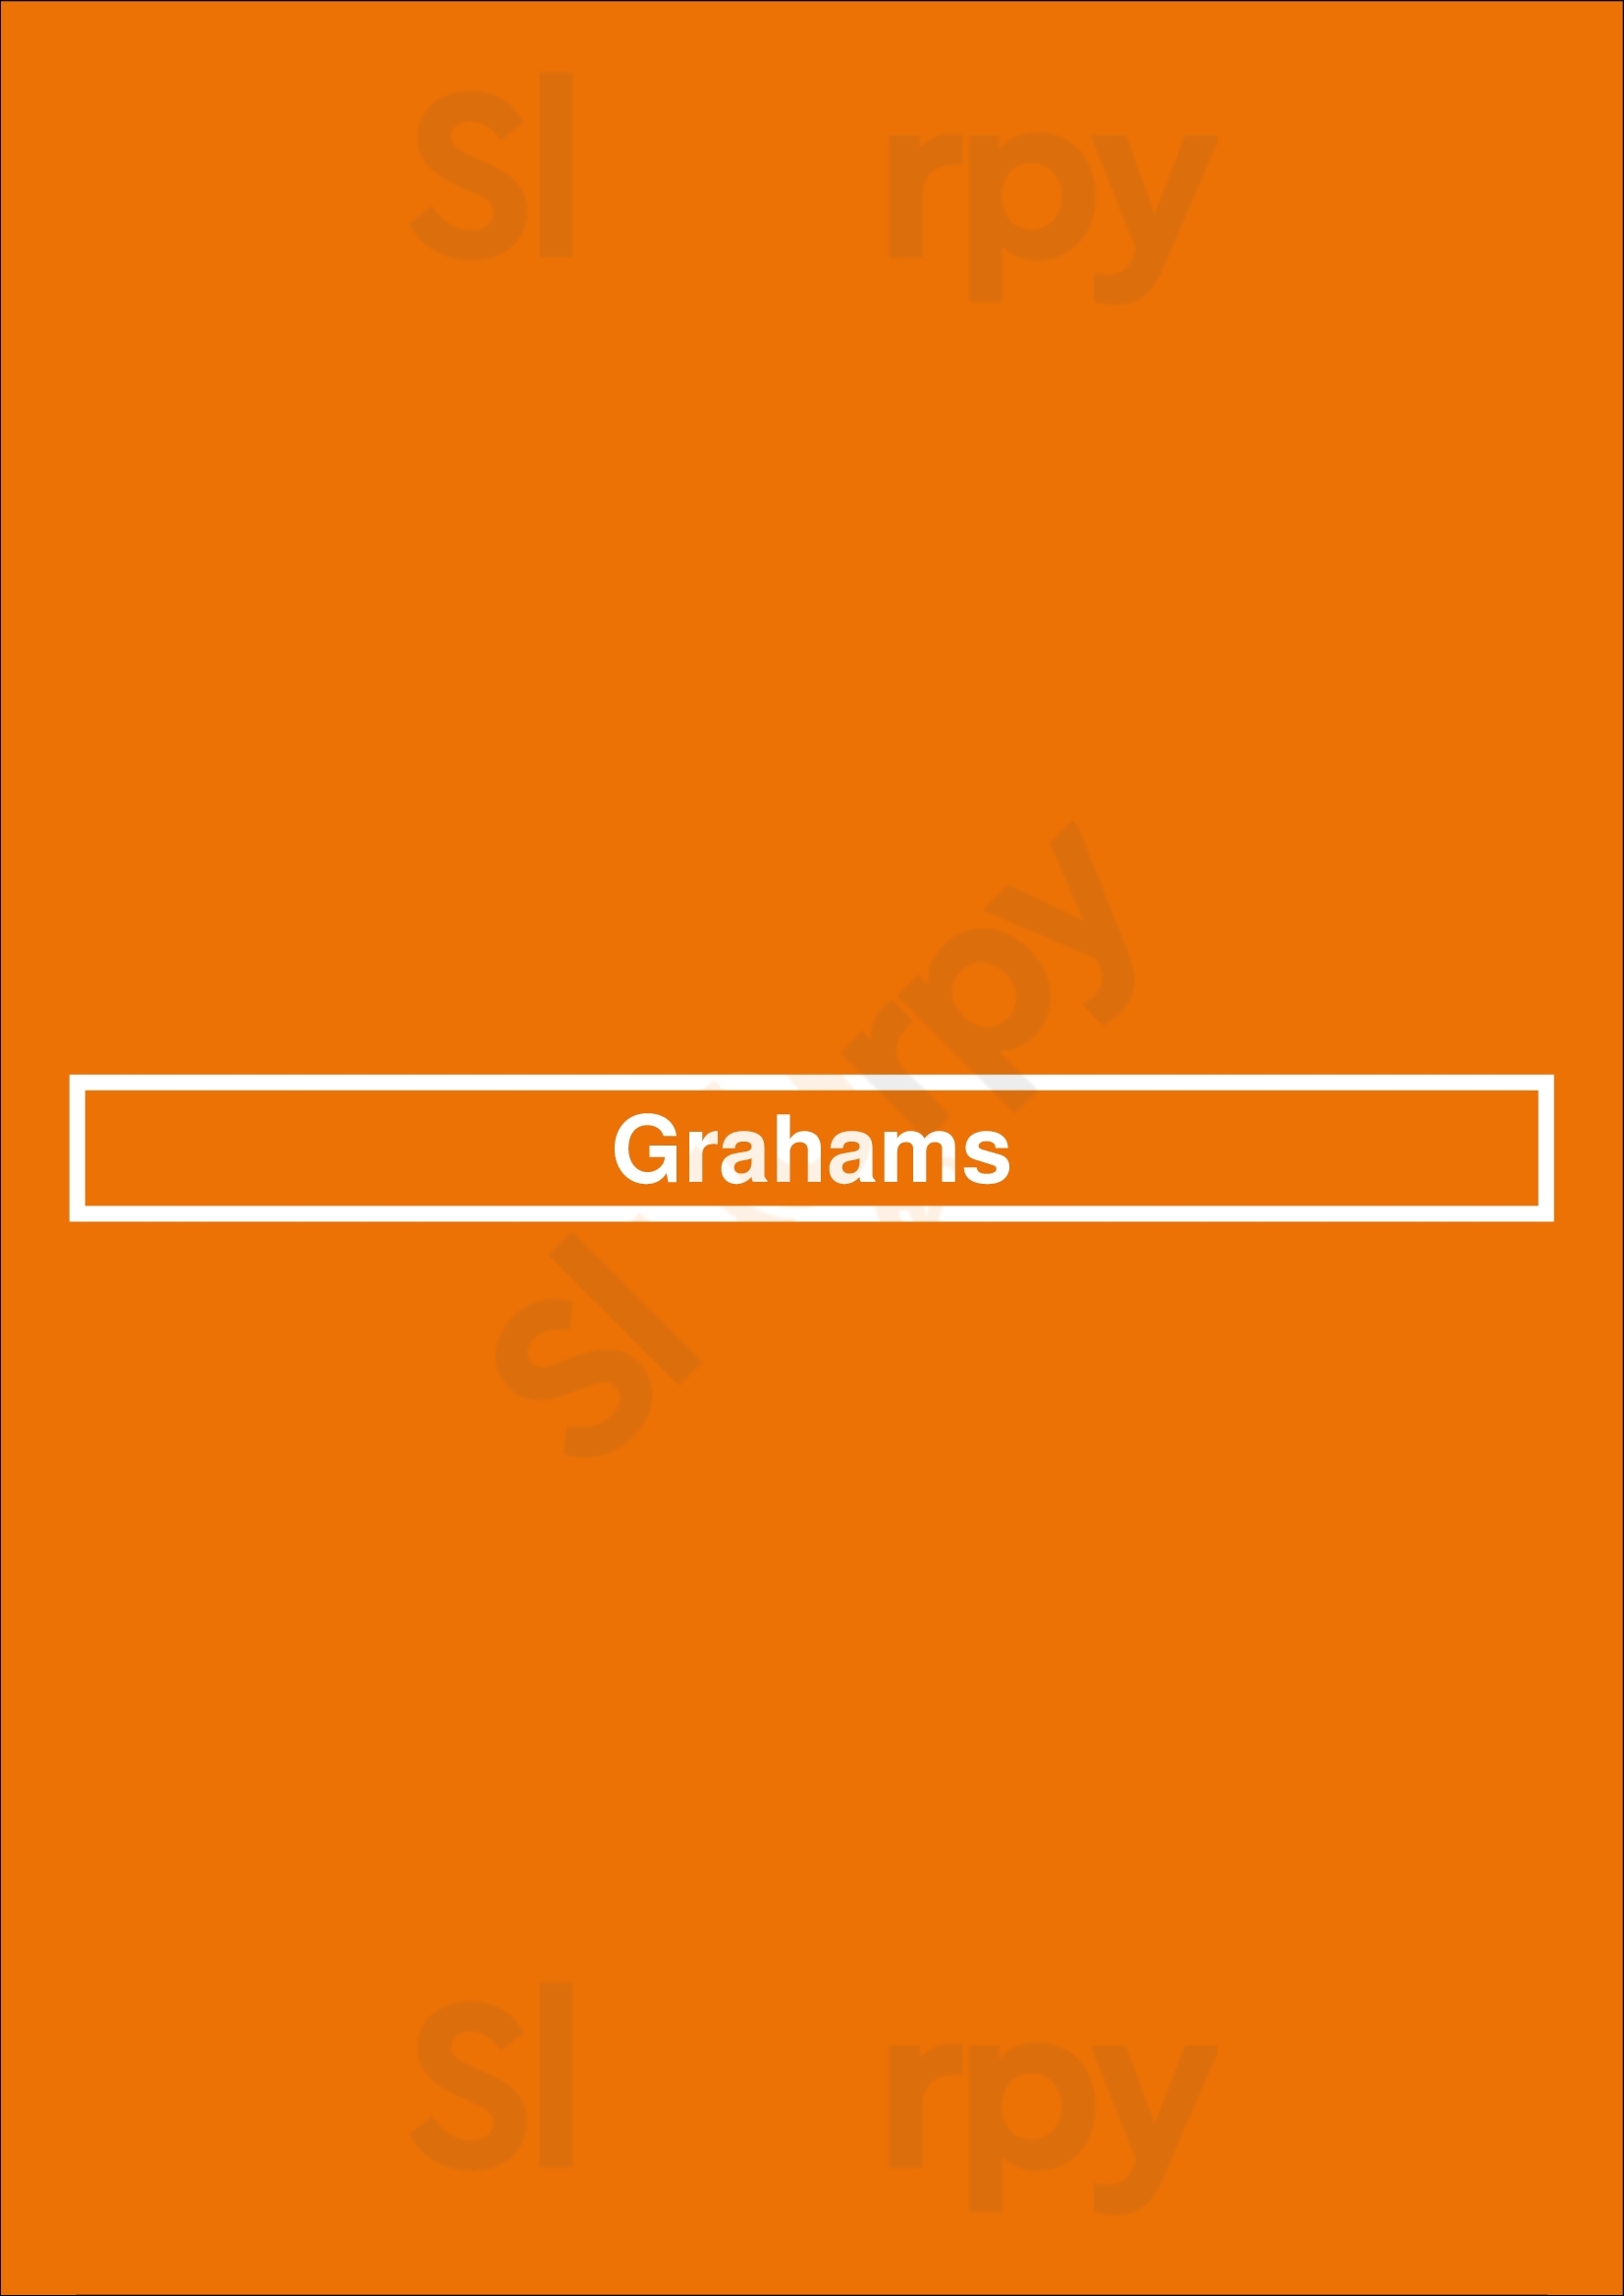 Grahams Olympic Valley Menu - 1